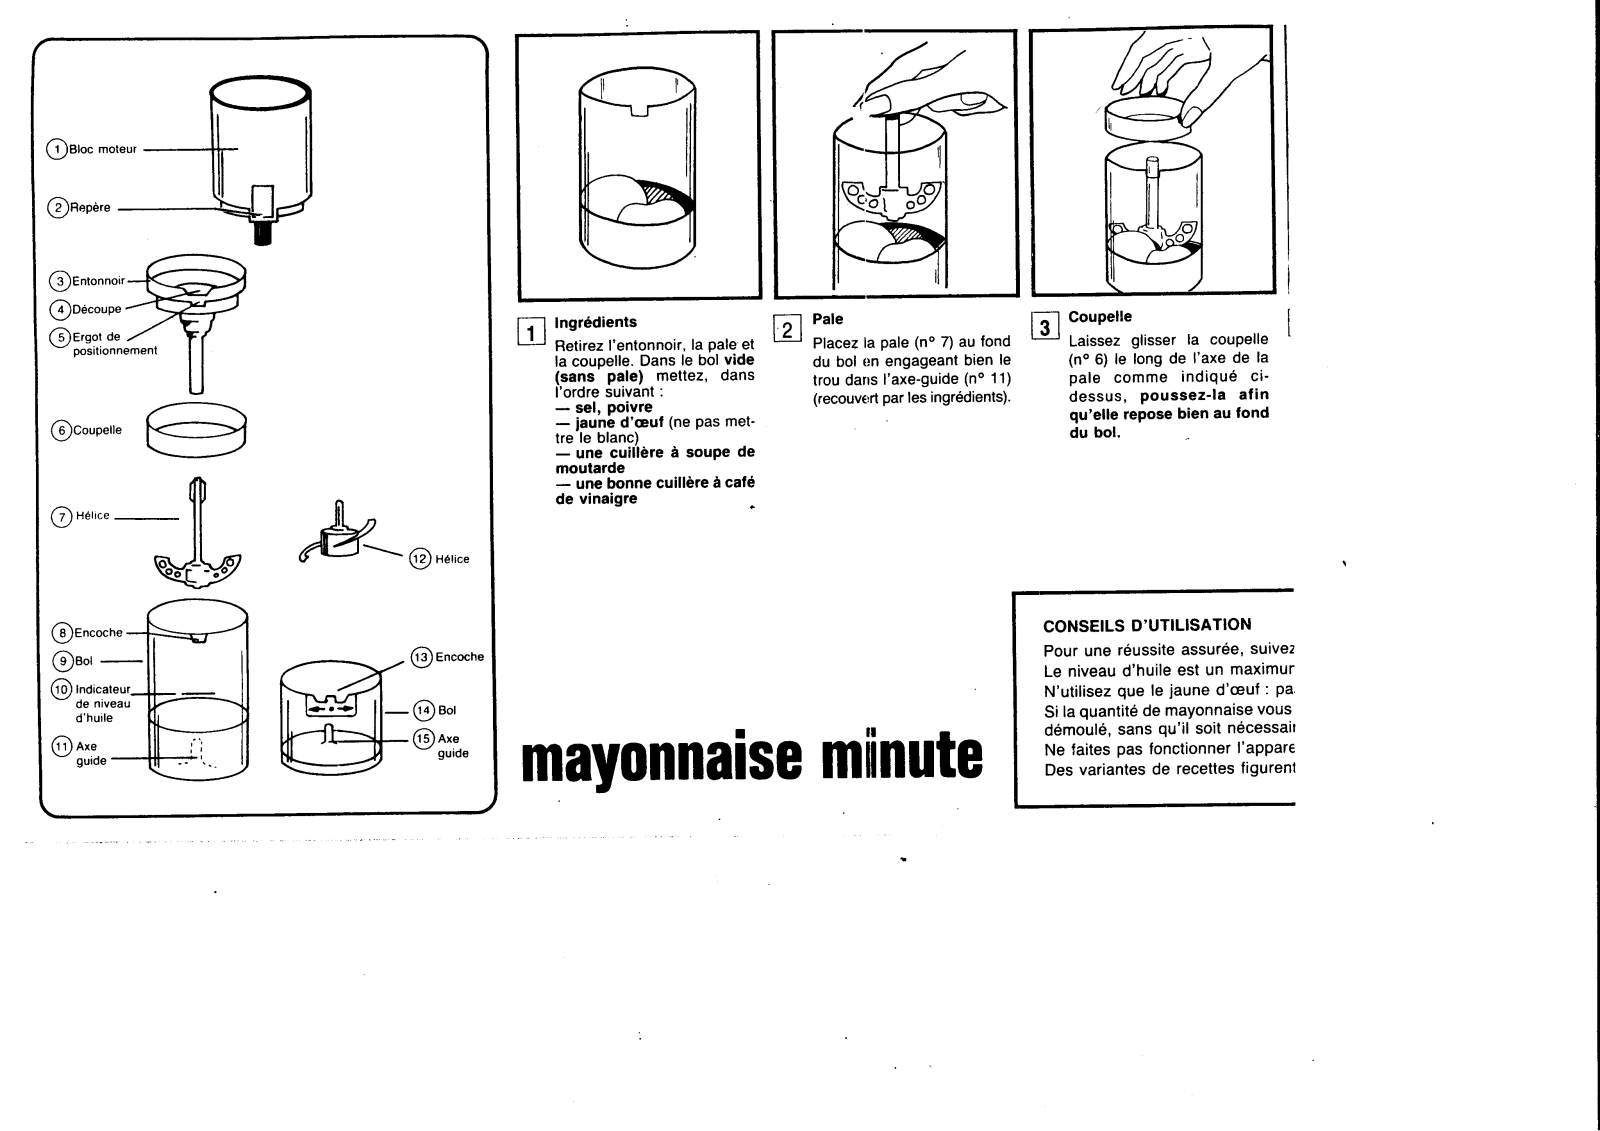 SEB Mini Hachoir Mayonnaise Minute User Manual